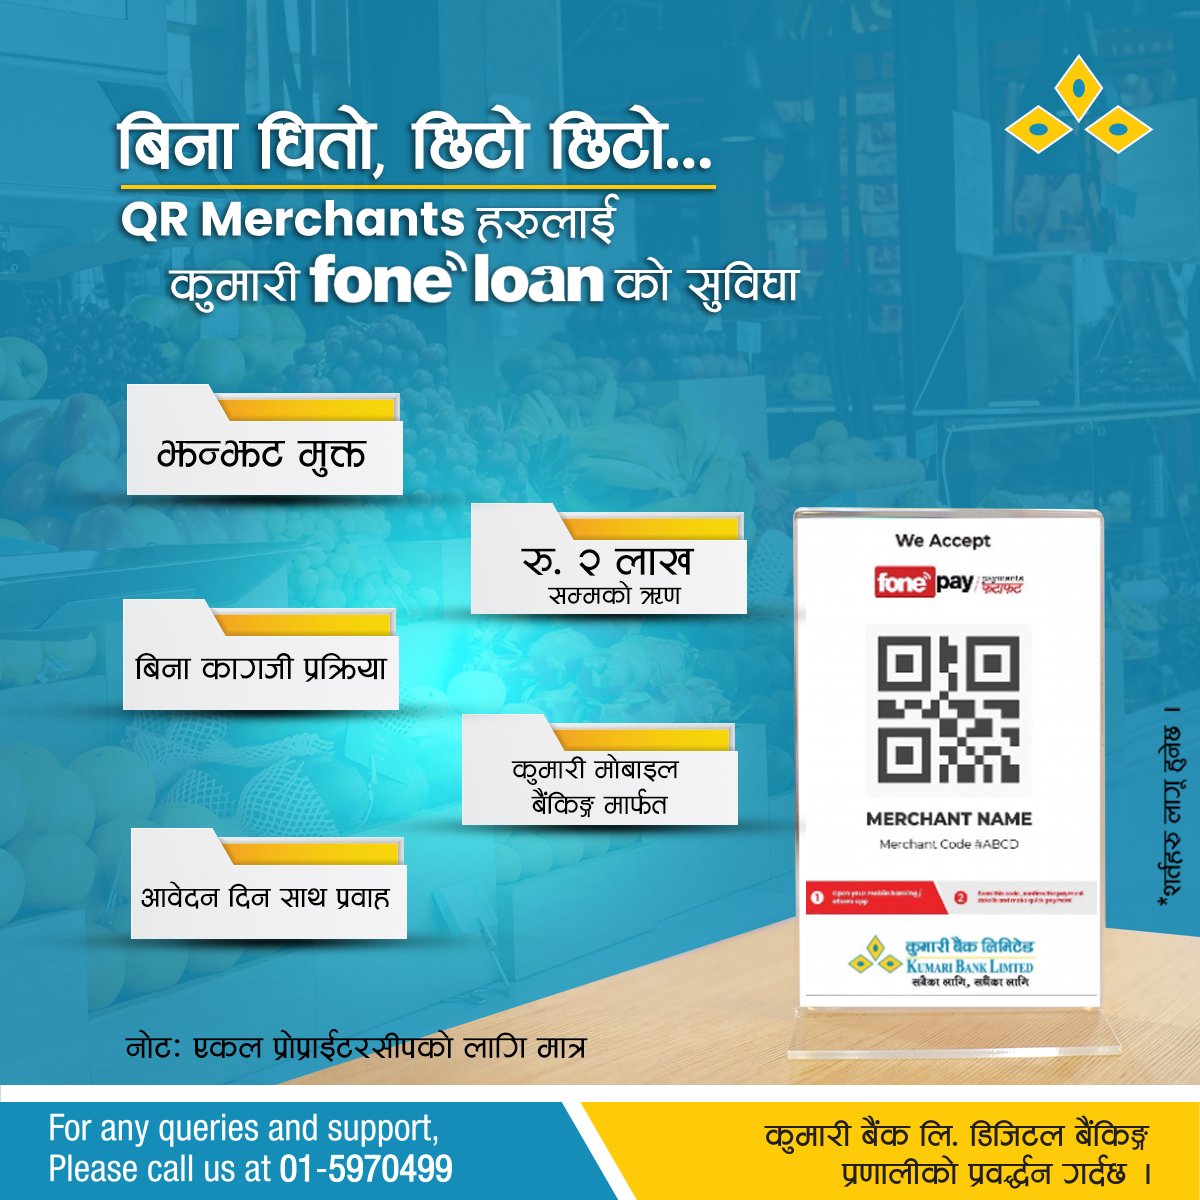 Kumari Bank launches phone loan facility for QR merchants via mobile banking app